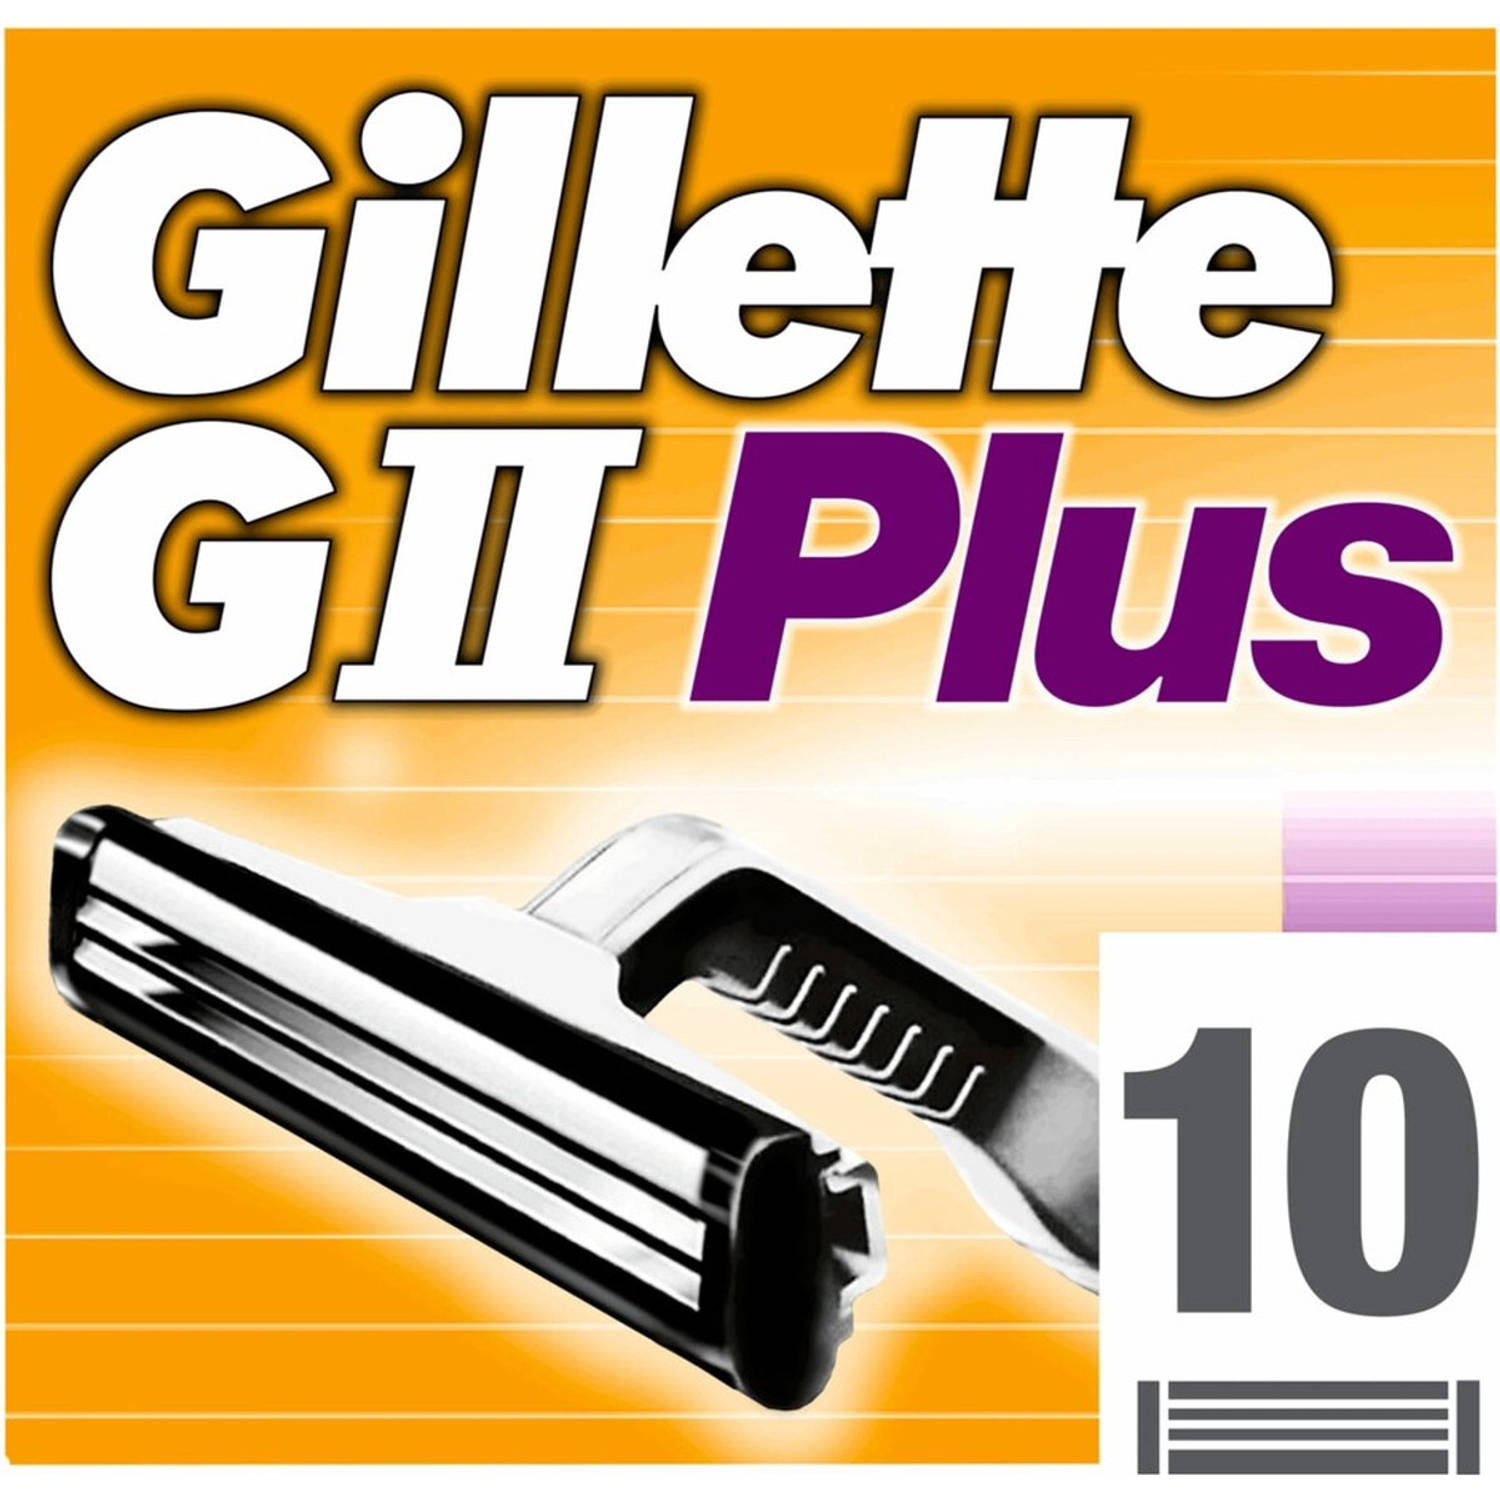 Gillette GII Plus Navulmesjes Mannen - 10 stuks